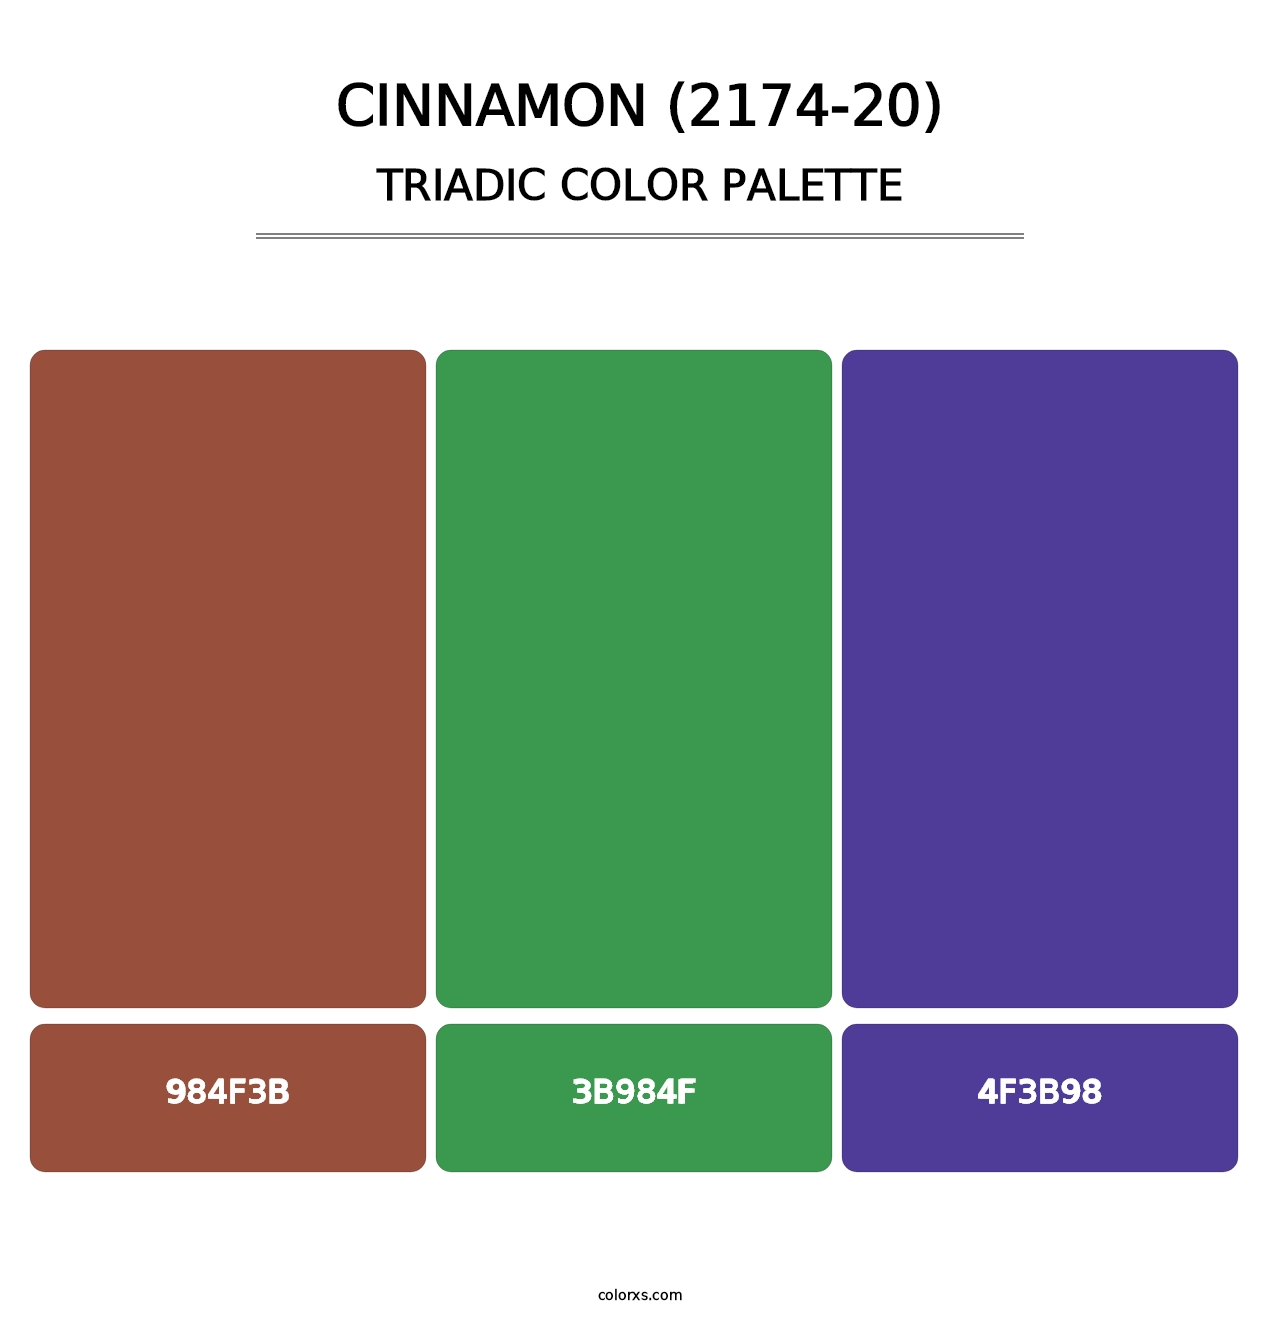 Cinnamon (2174-20) - Triadic Color Palette